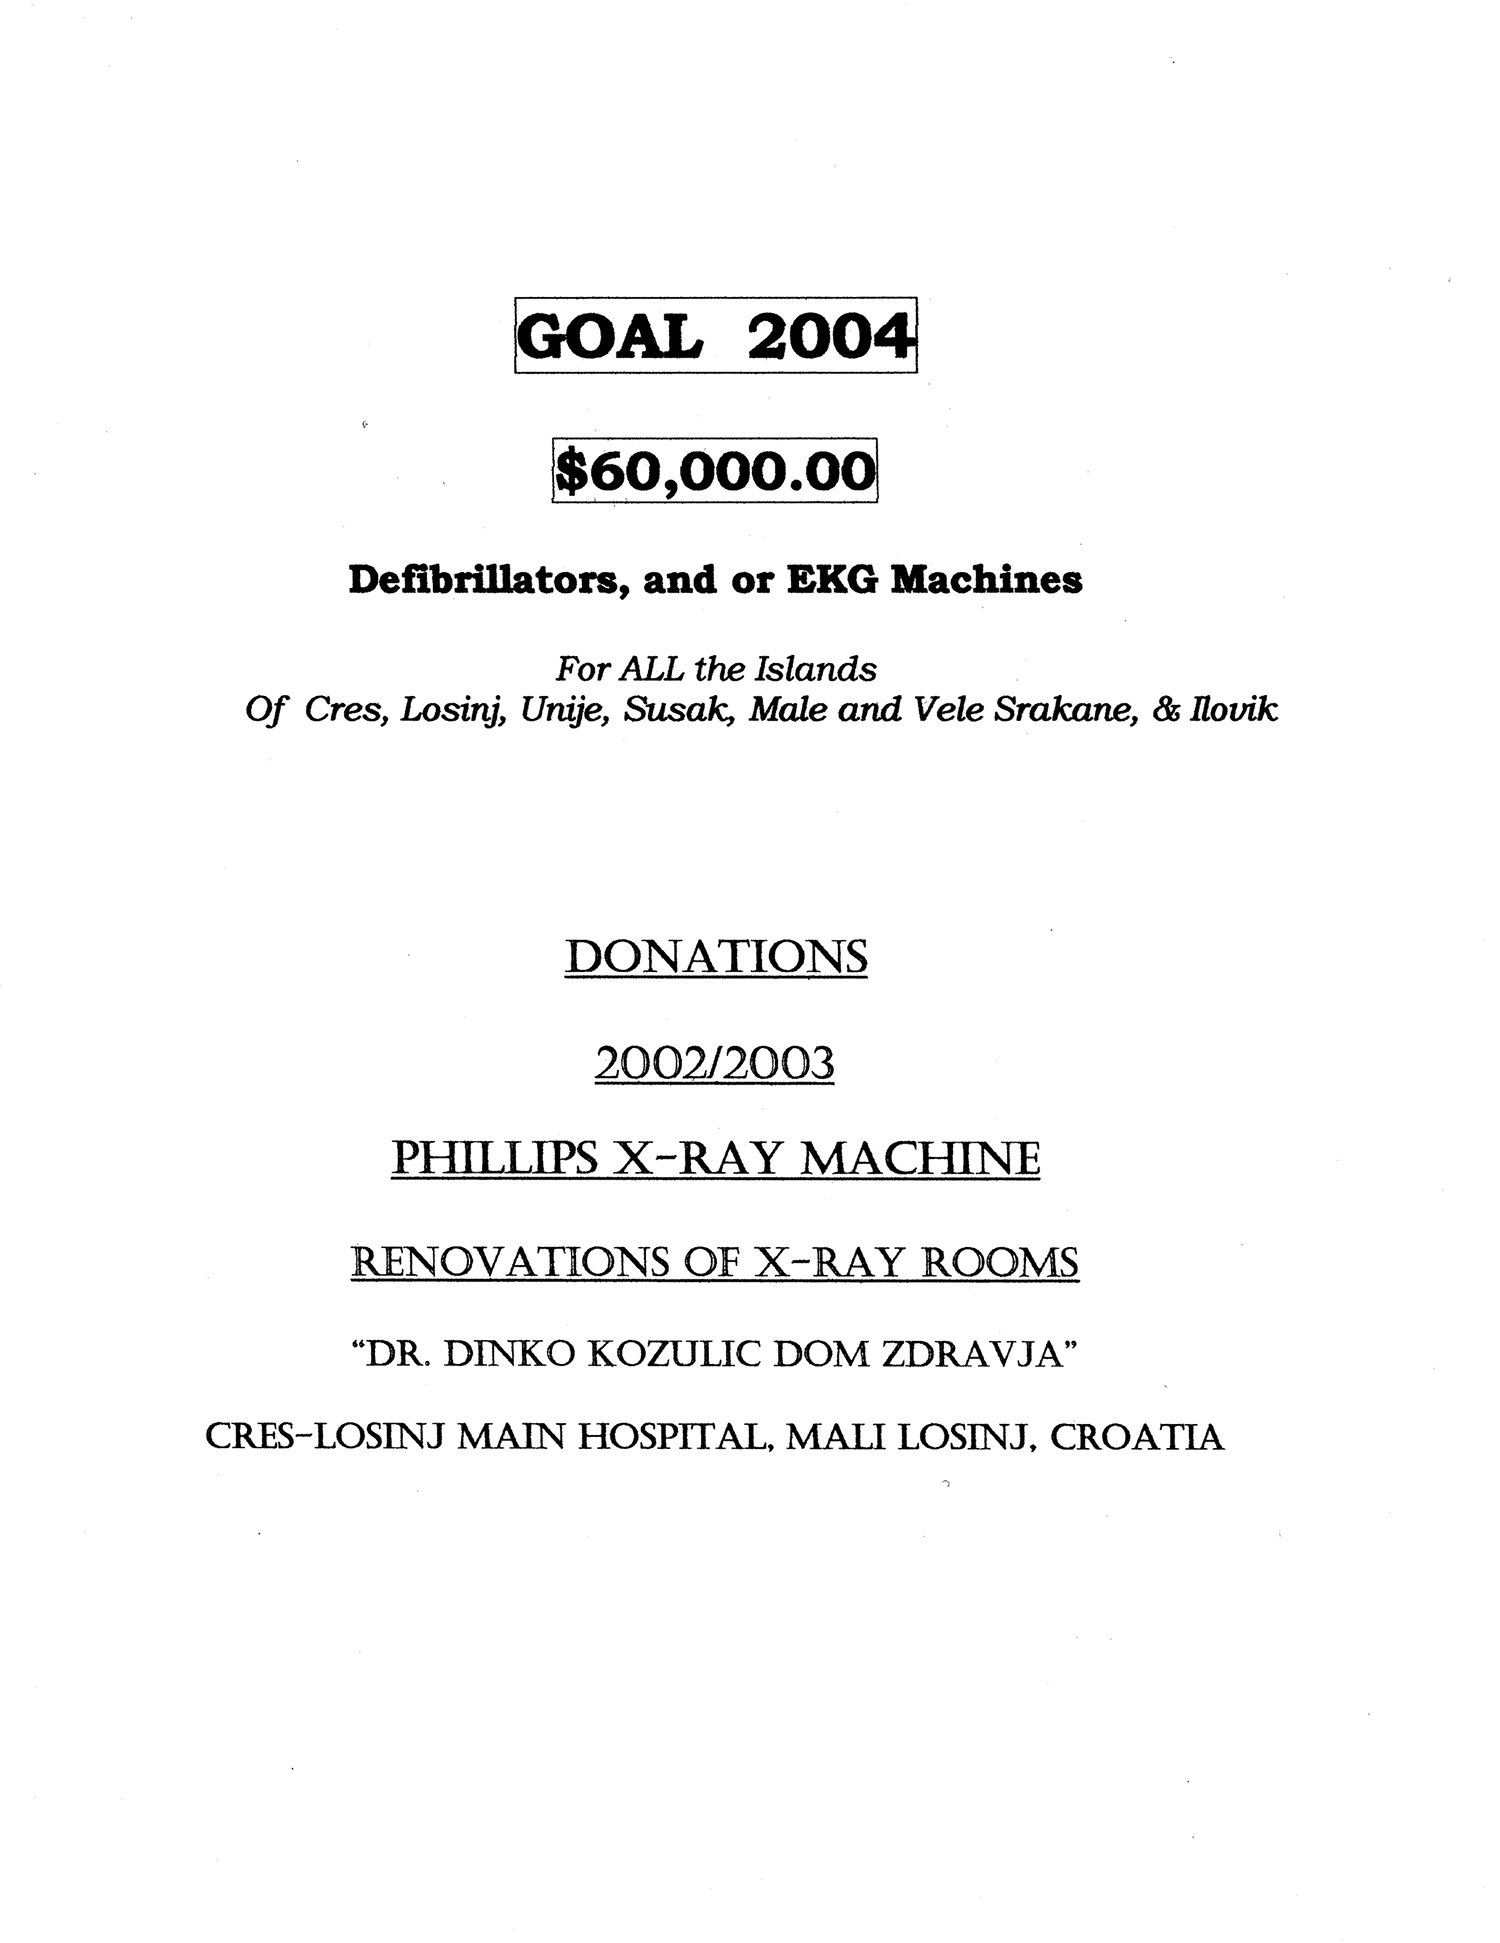 Donations 2002-2003